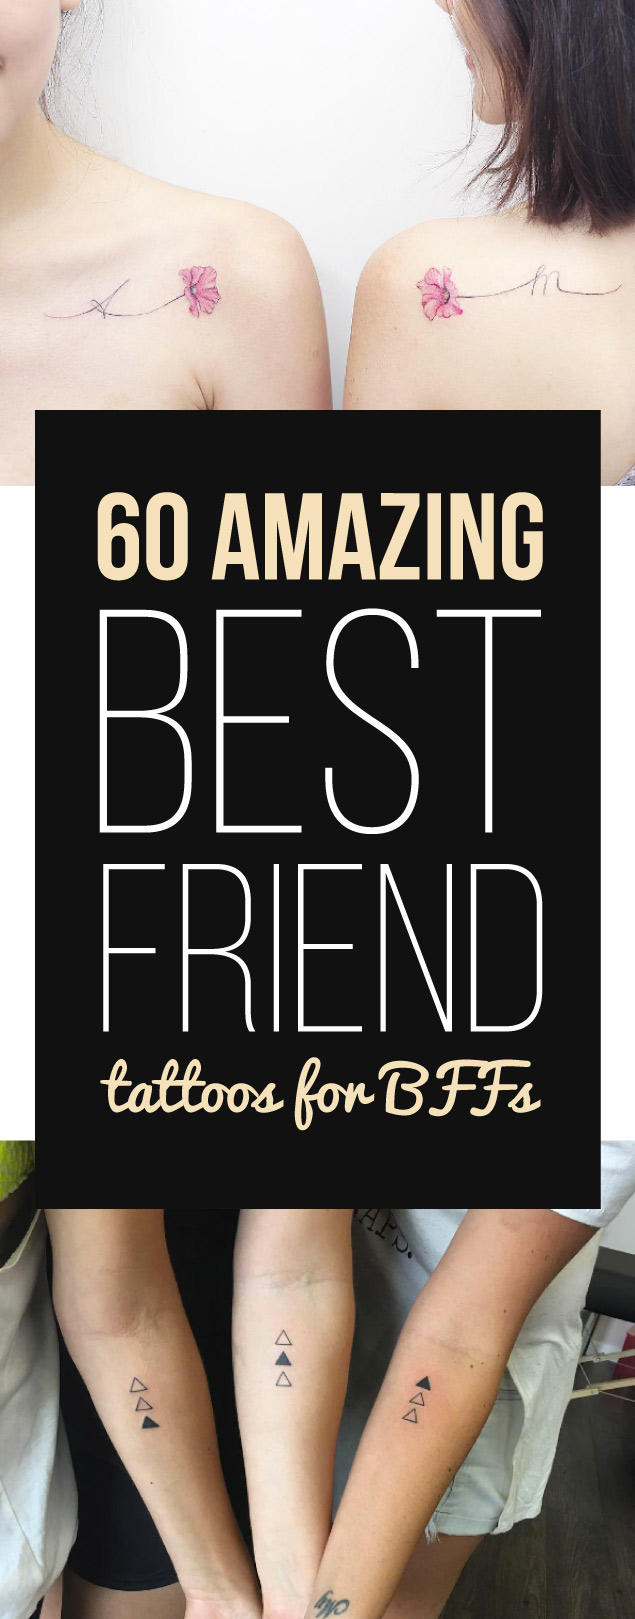 60 Amazing Best Friend Tattoos for BFFs